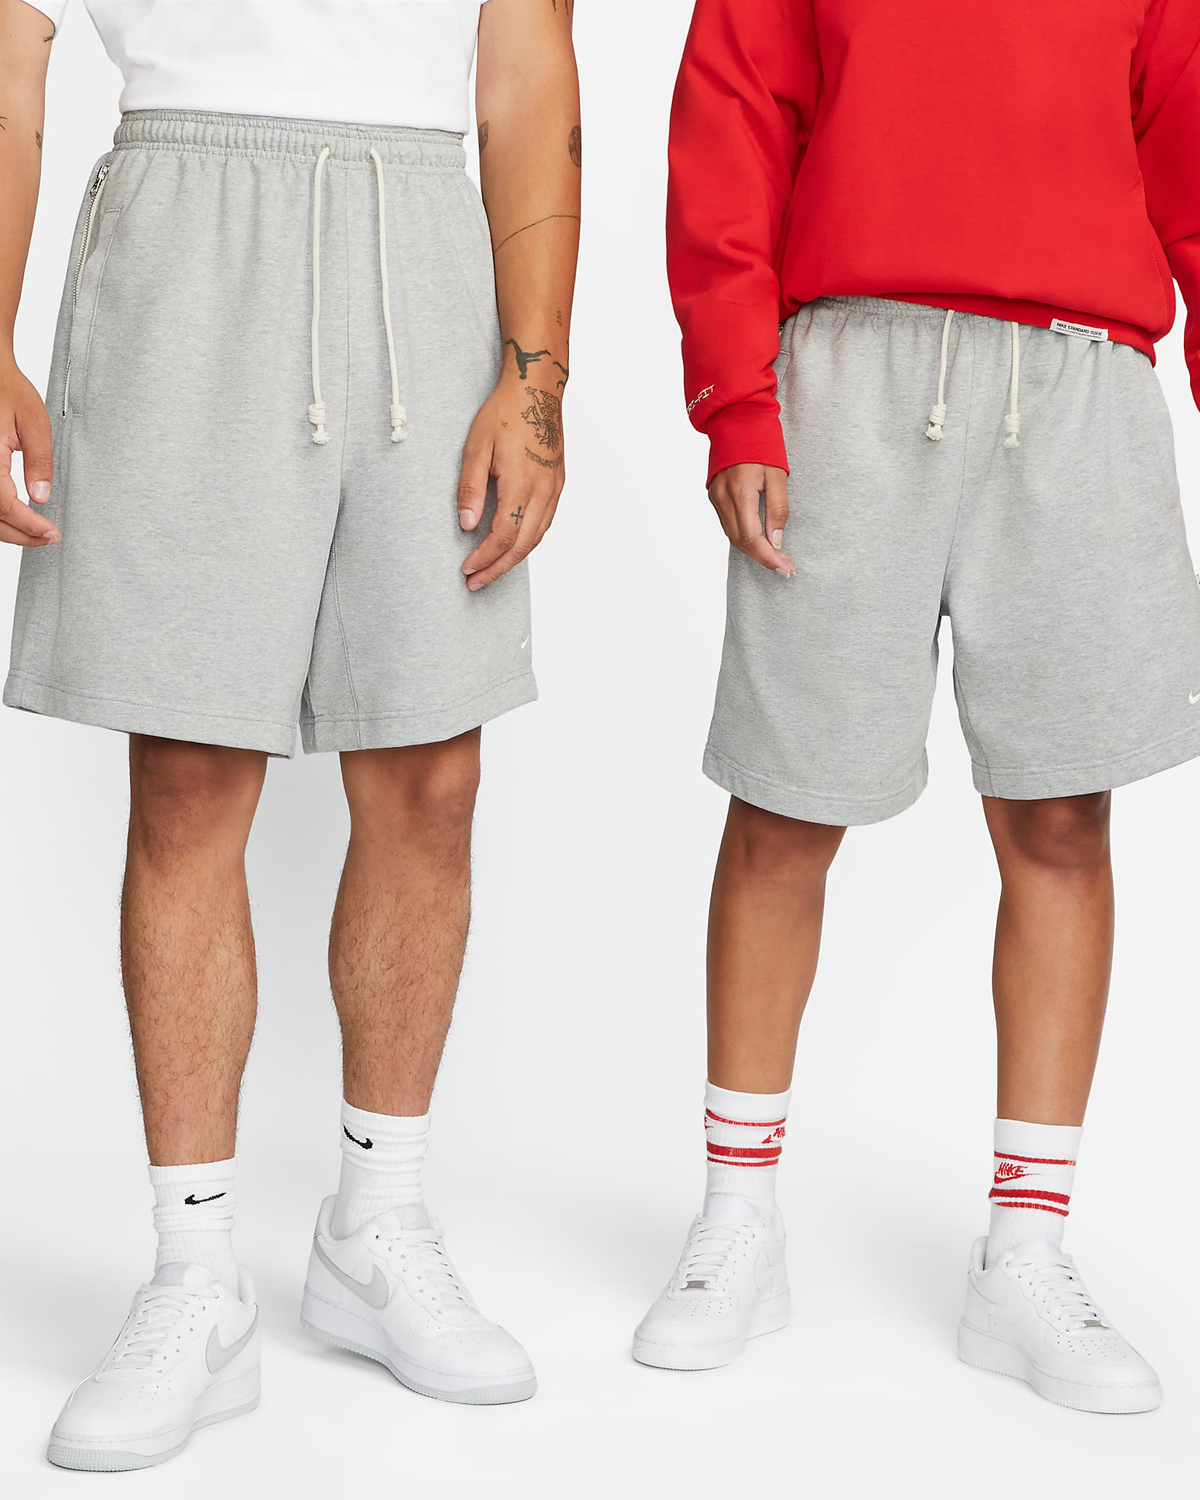 Nike-Standard-Issue-Shorts-Grey